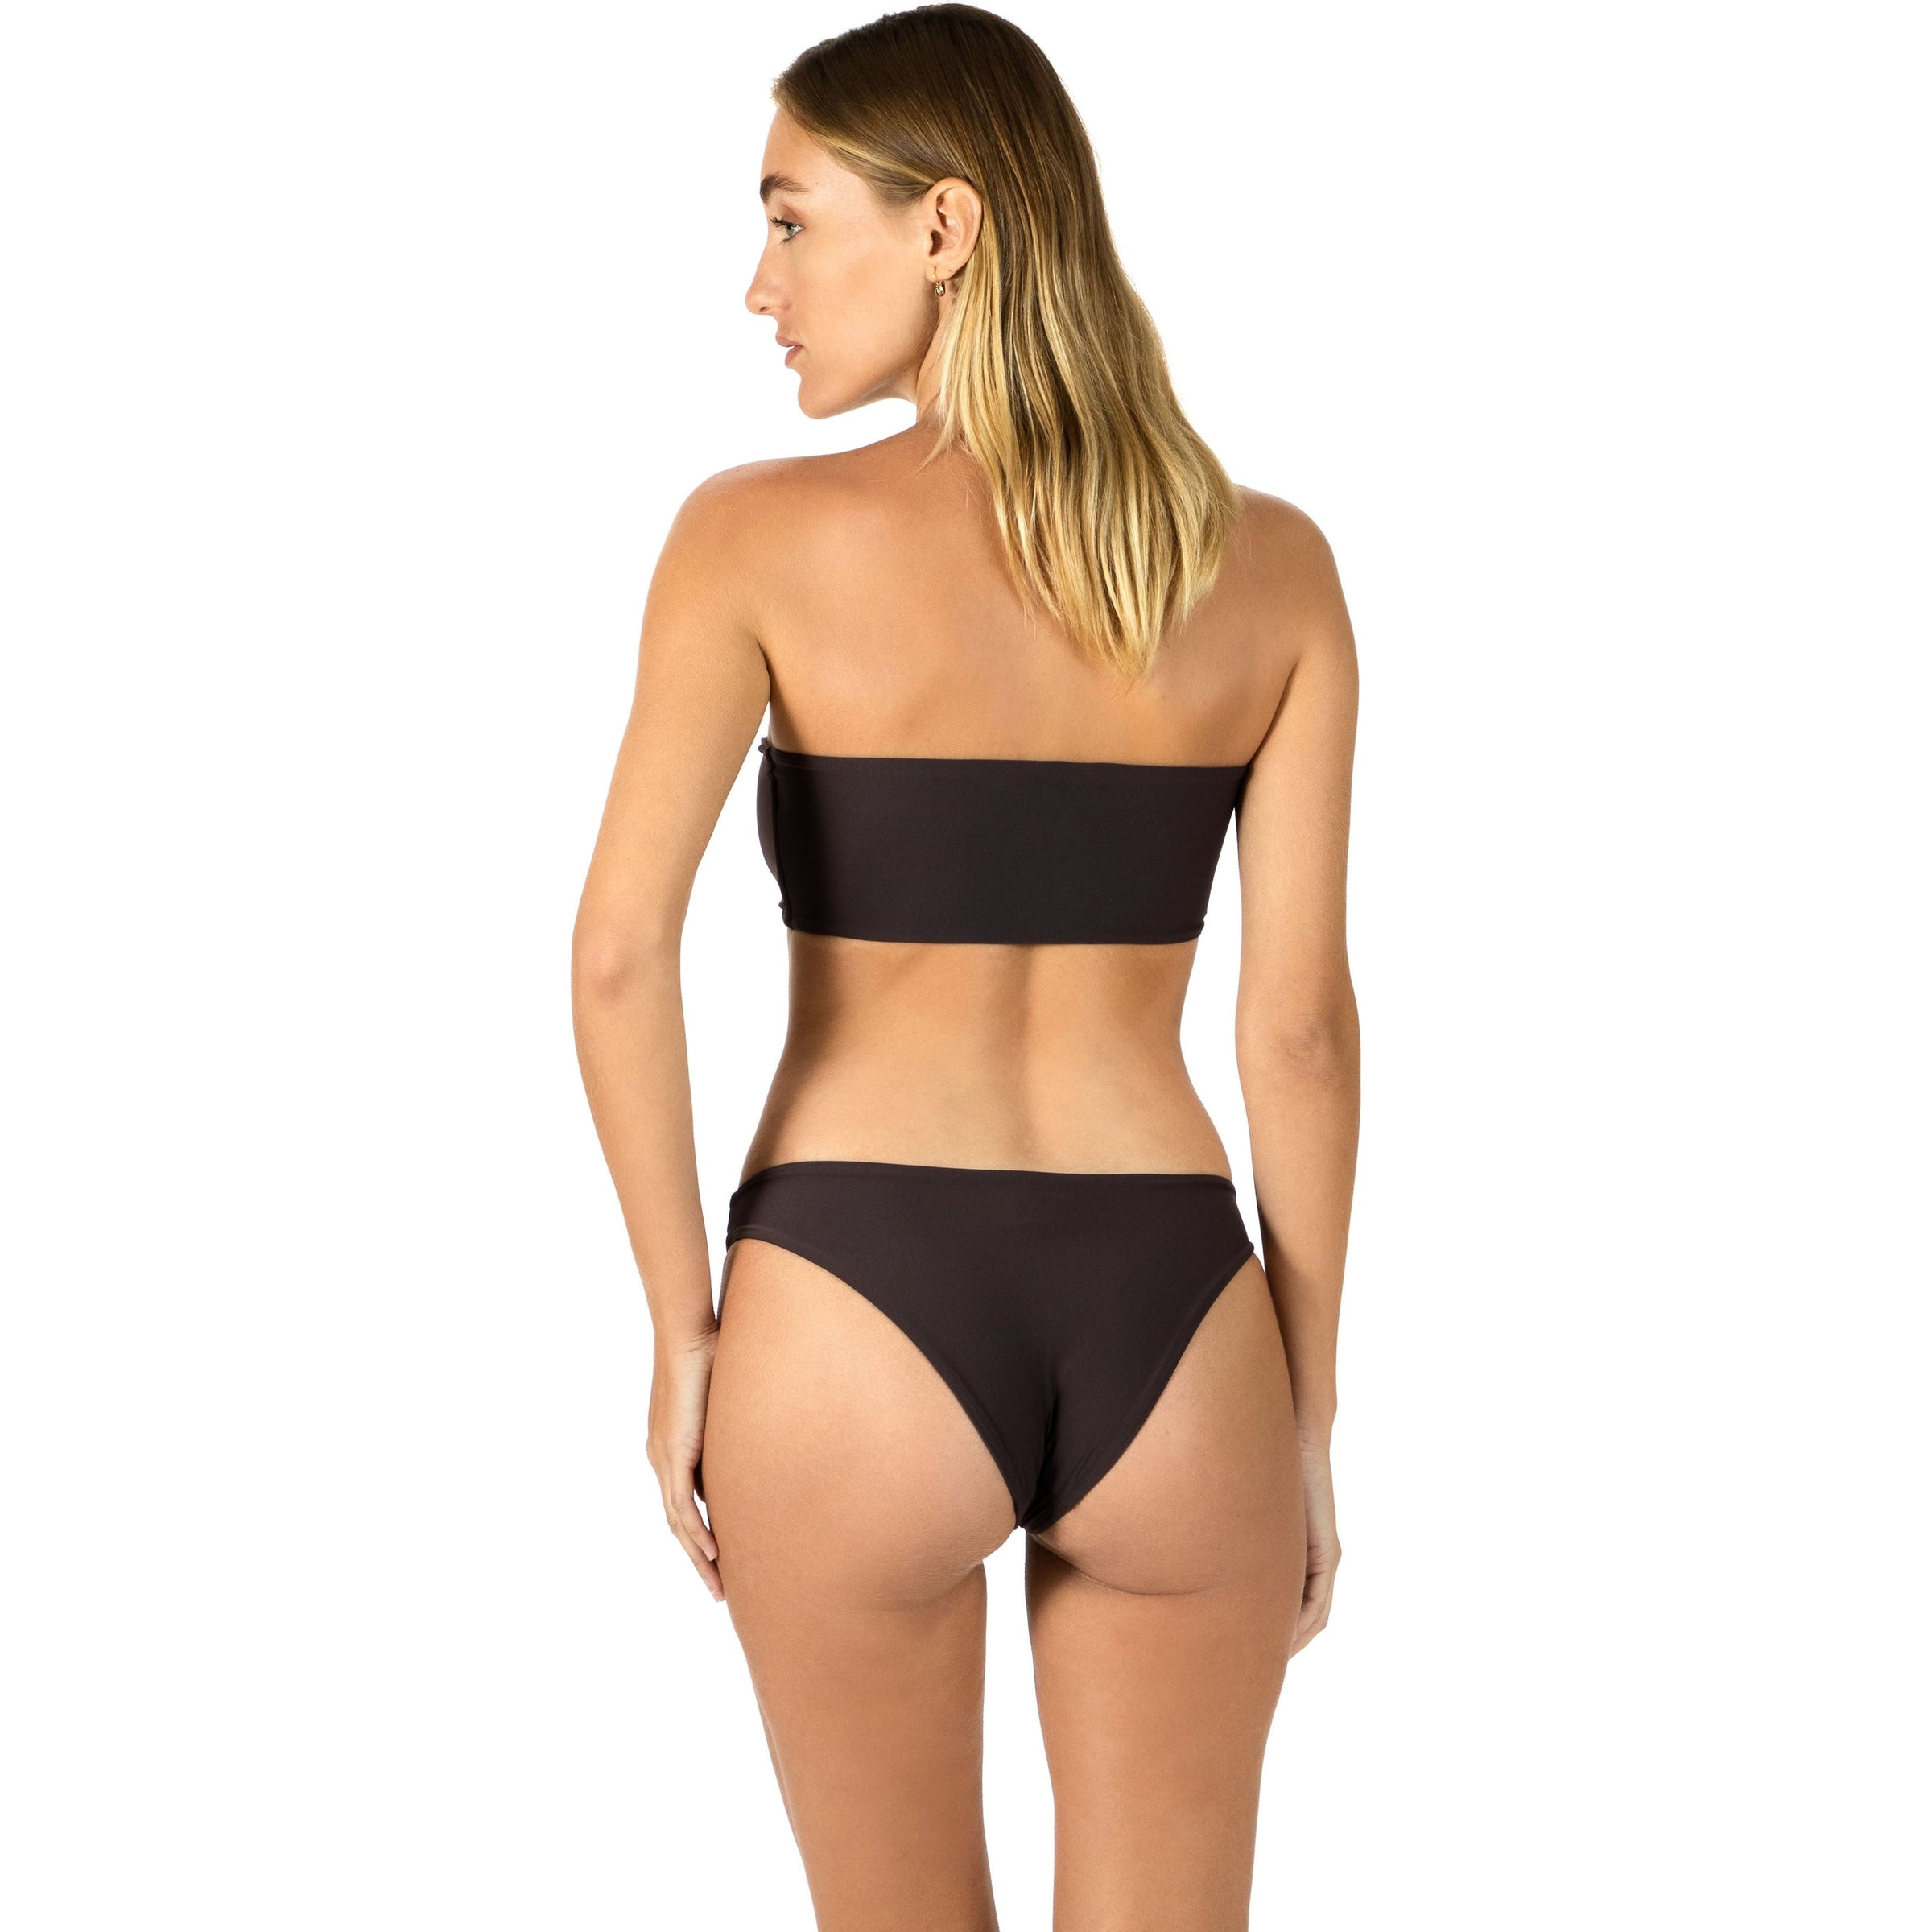 The Tried-and-True Bikini Set - Brown